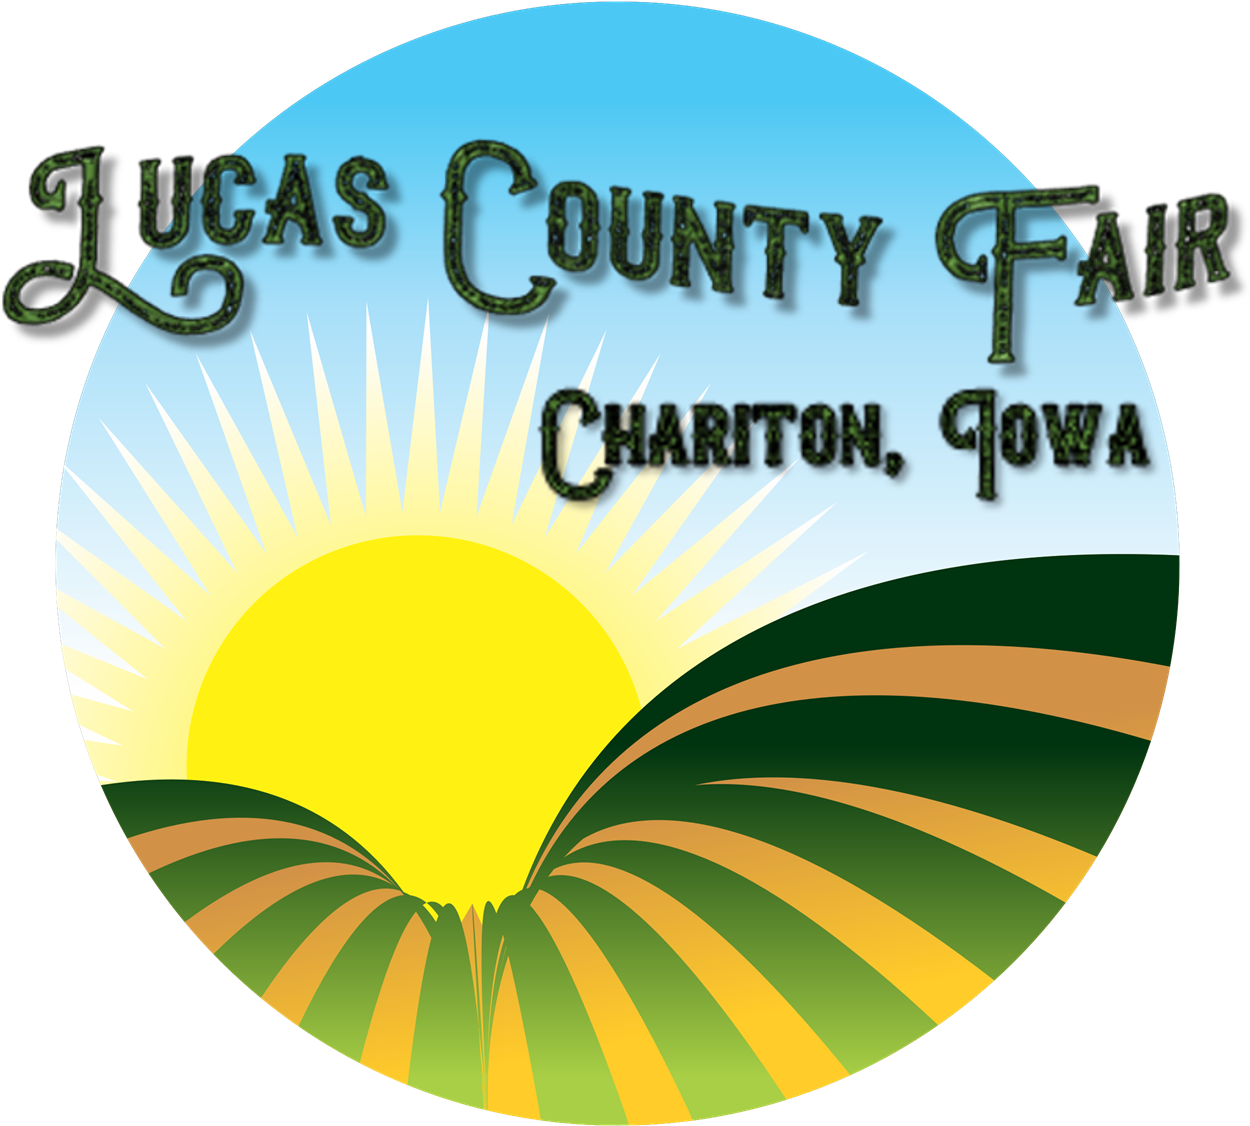 Lucas County Fair, Chariton, Iowa, Fairgrounds - Portable Network Graphics (1276x1125)